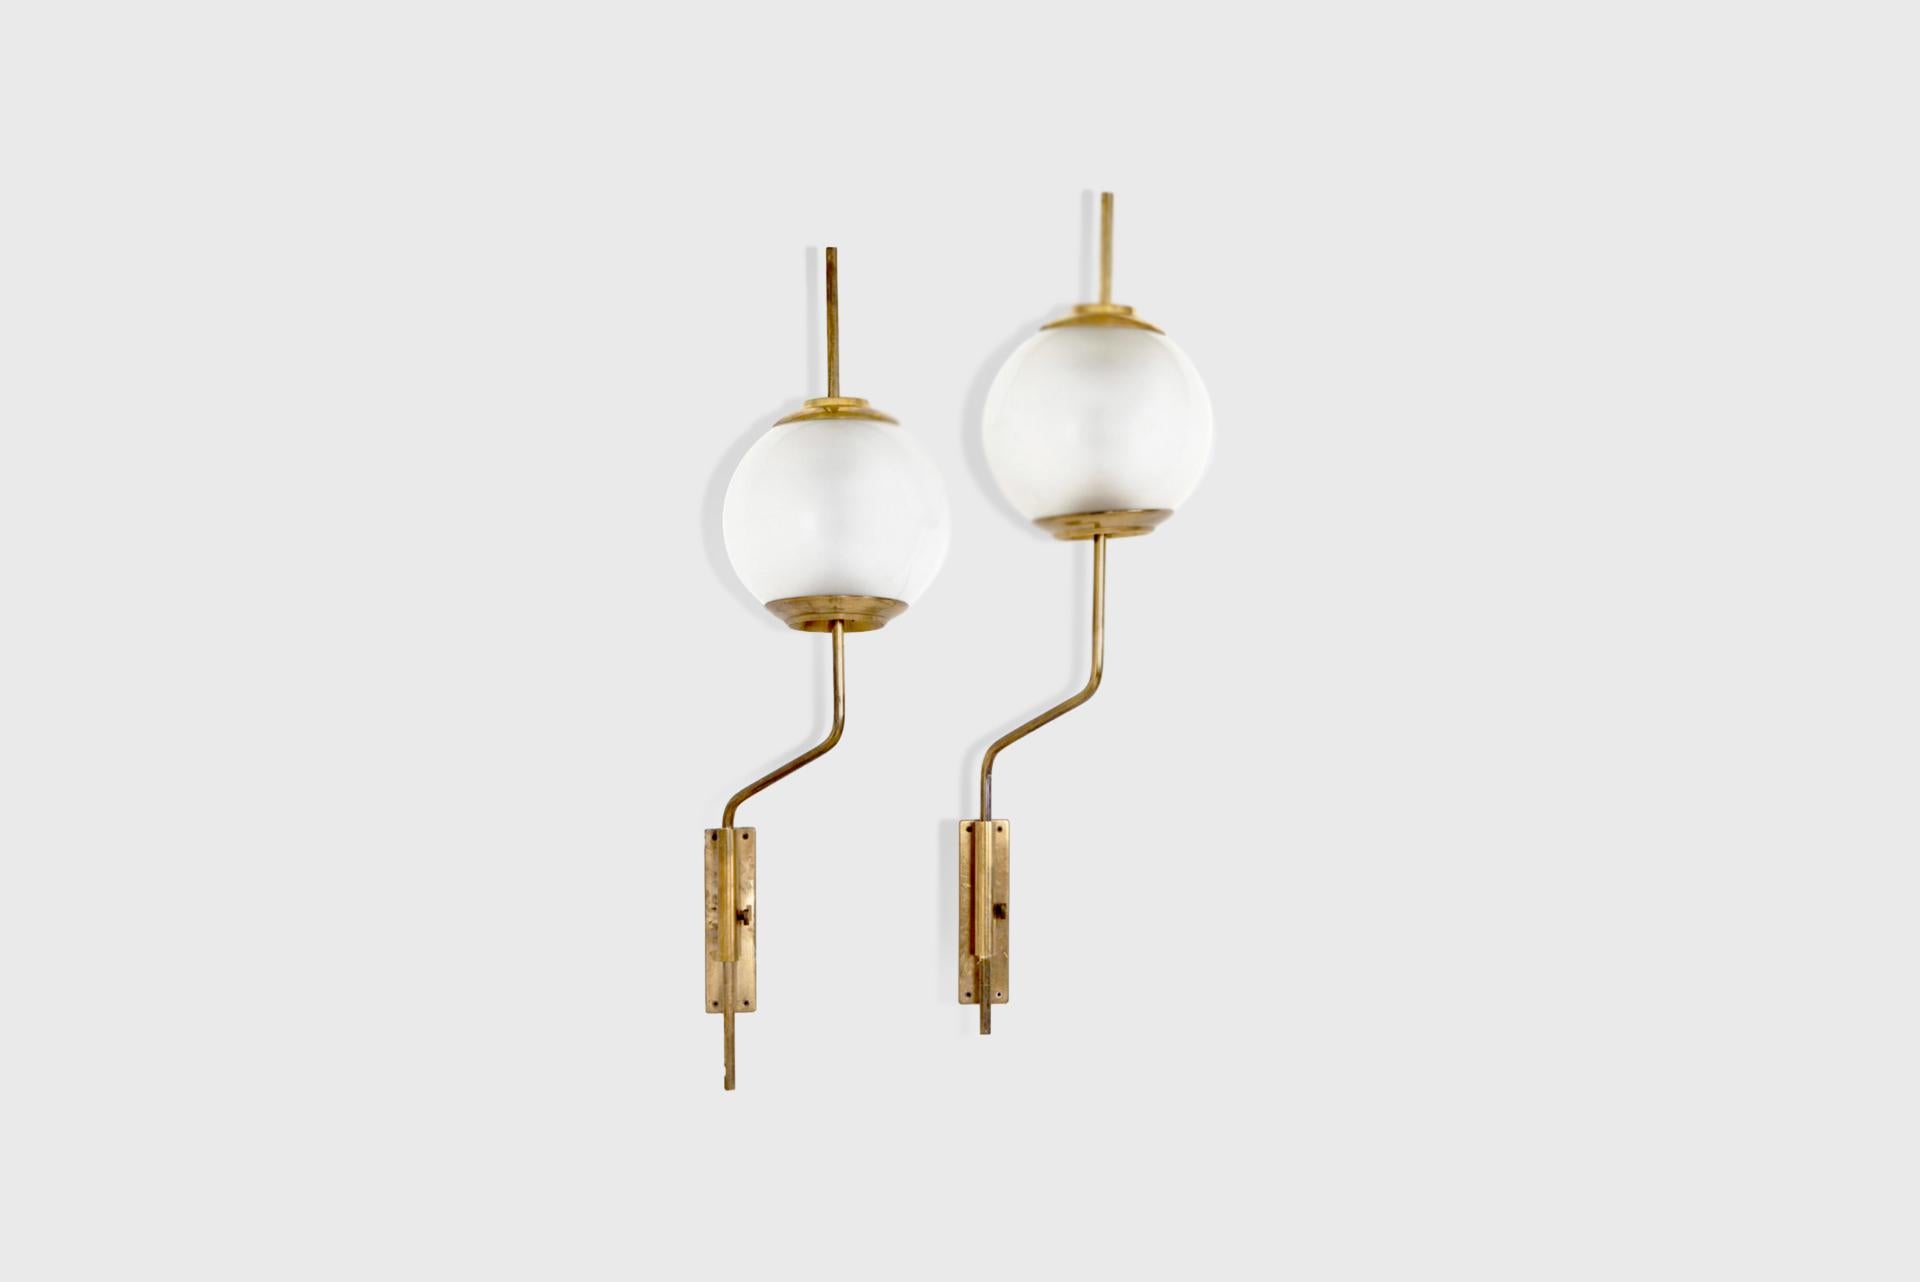 Luigi Caccia Dominioni Pair of wall lamps model “LP 11” In Good Condition For Sale In Barcelona, ES